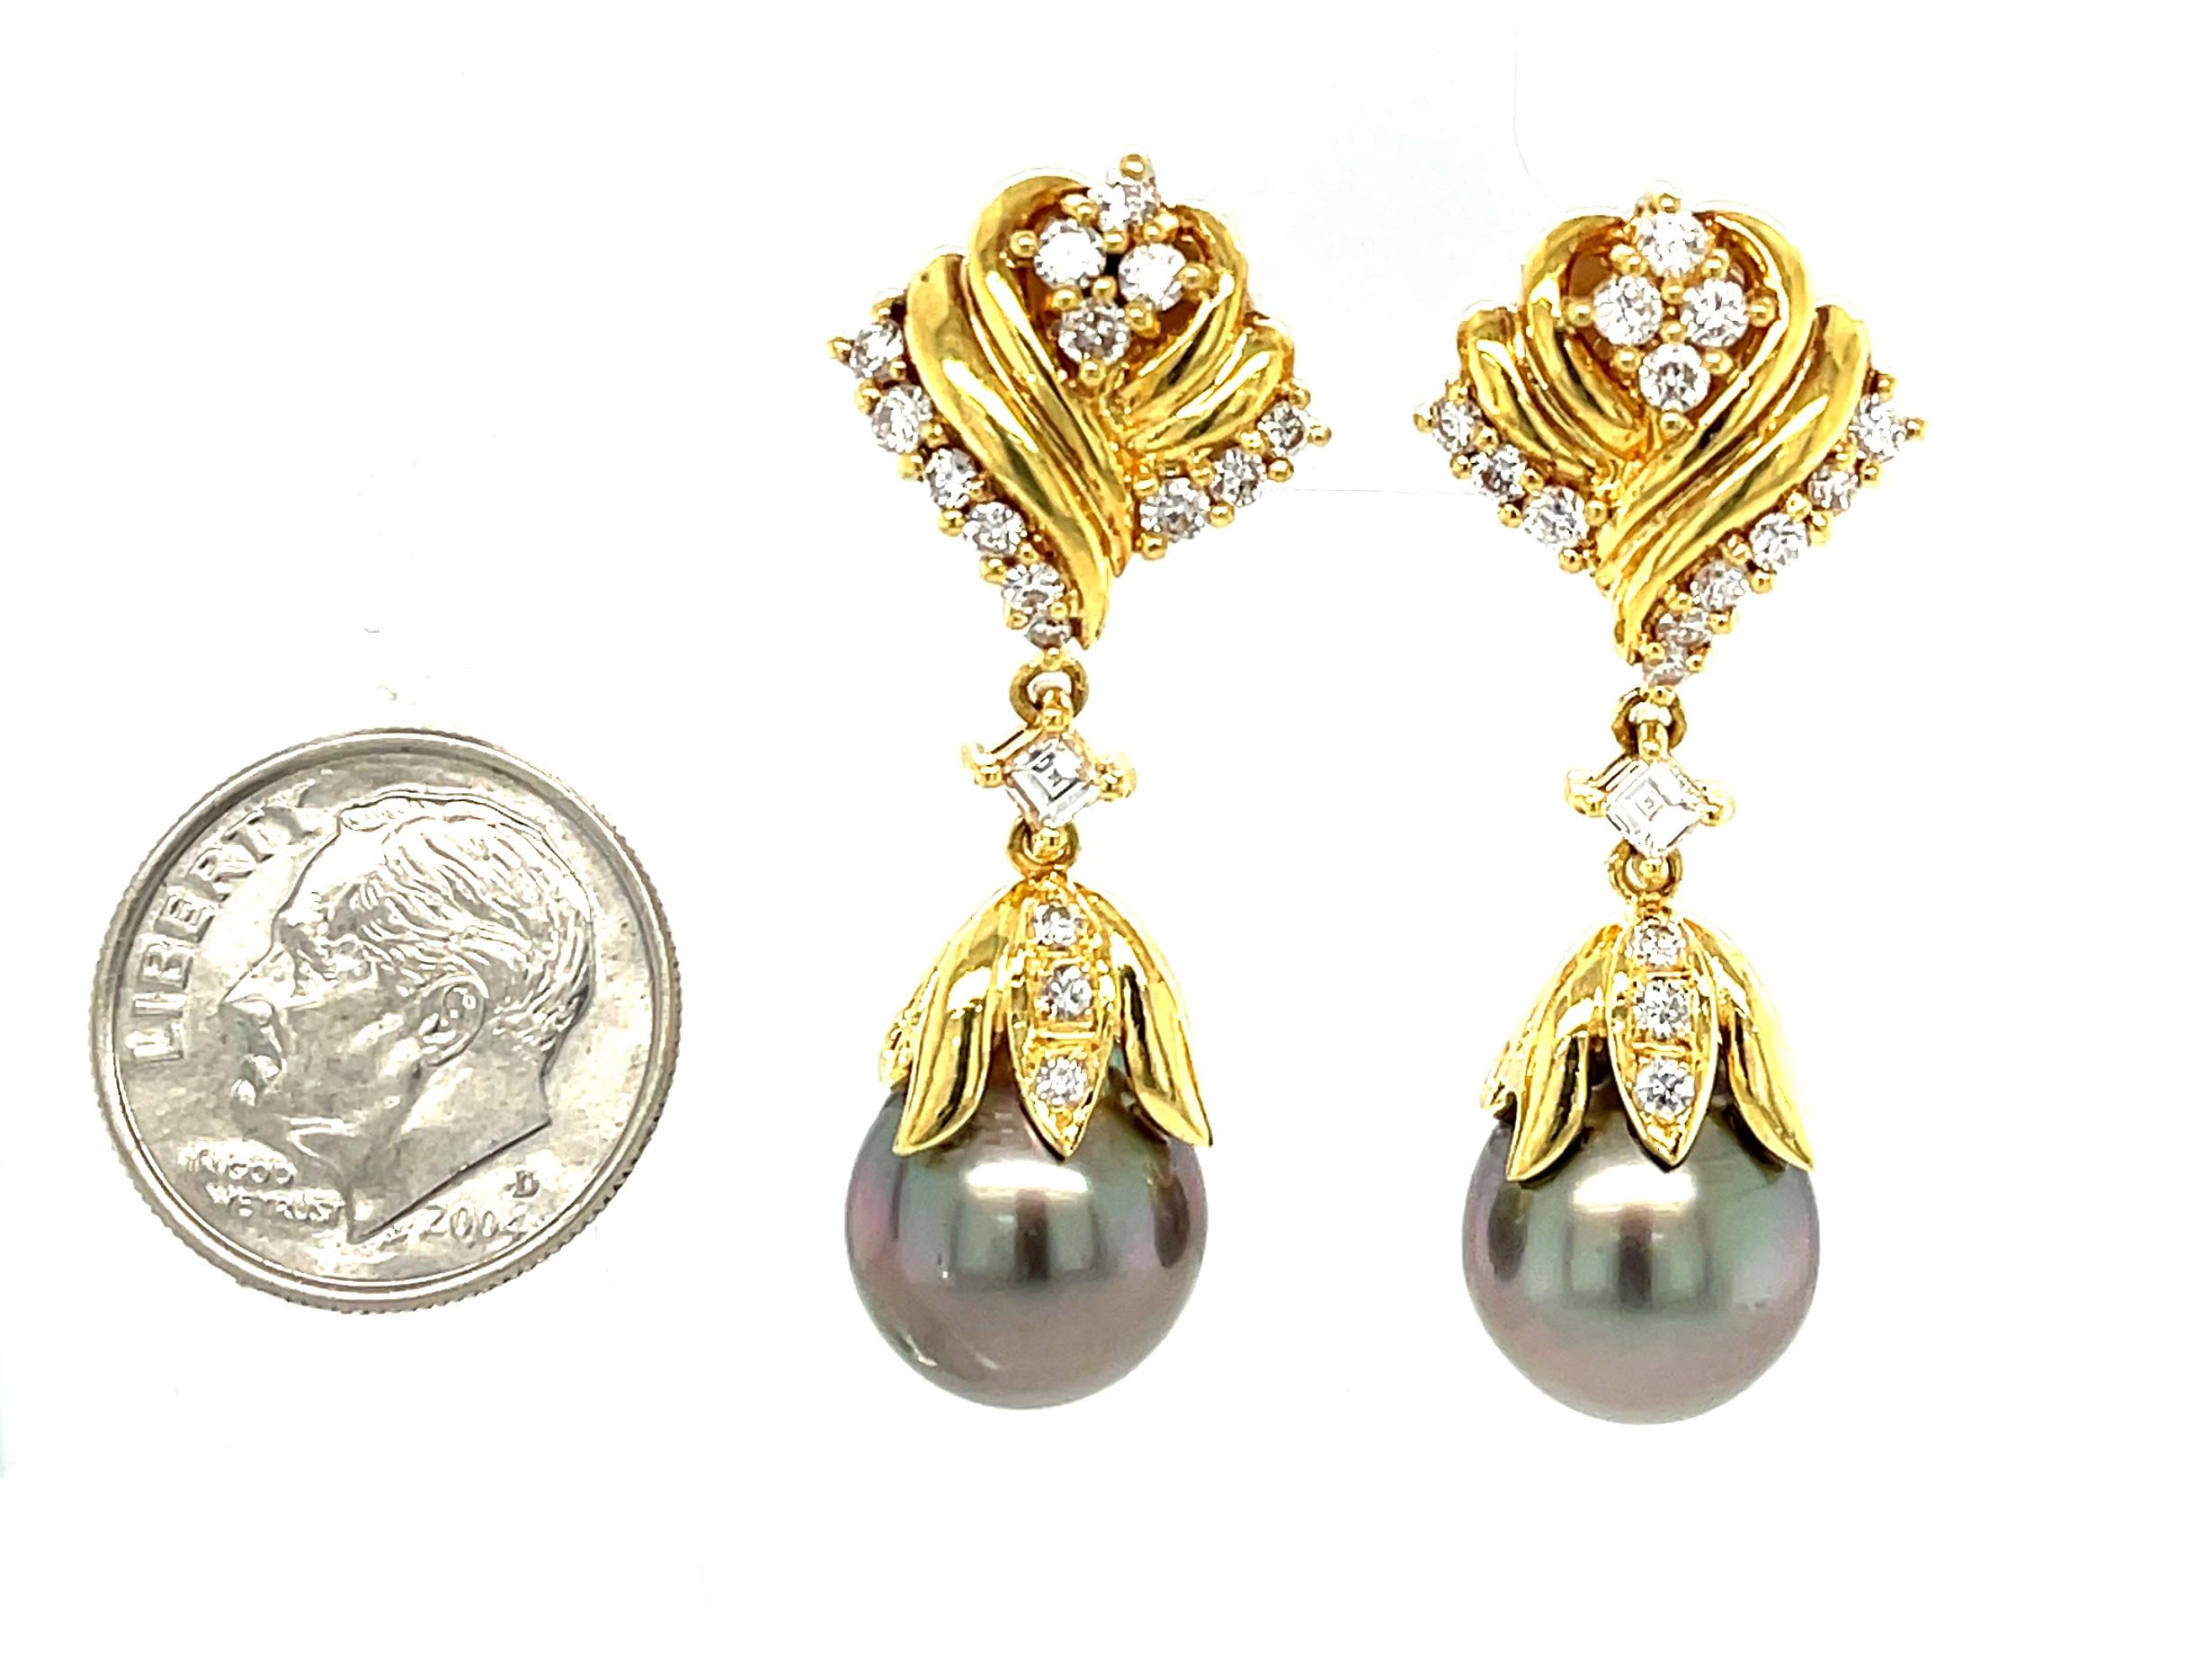  11.25mm South Sea Pearl and Diamond Dangle Earrings in 18k Yellow Gold  2